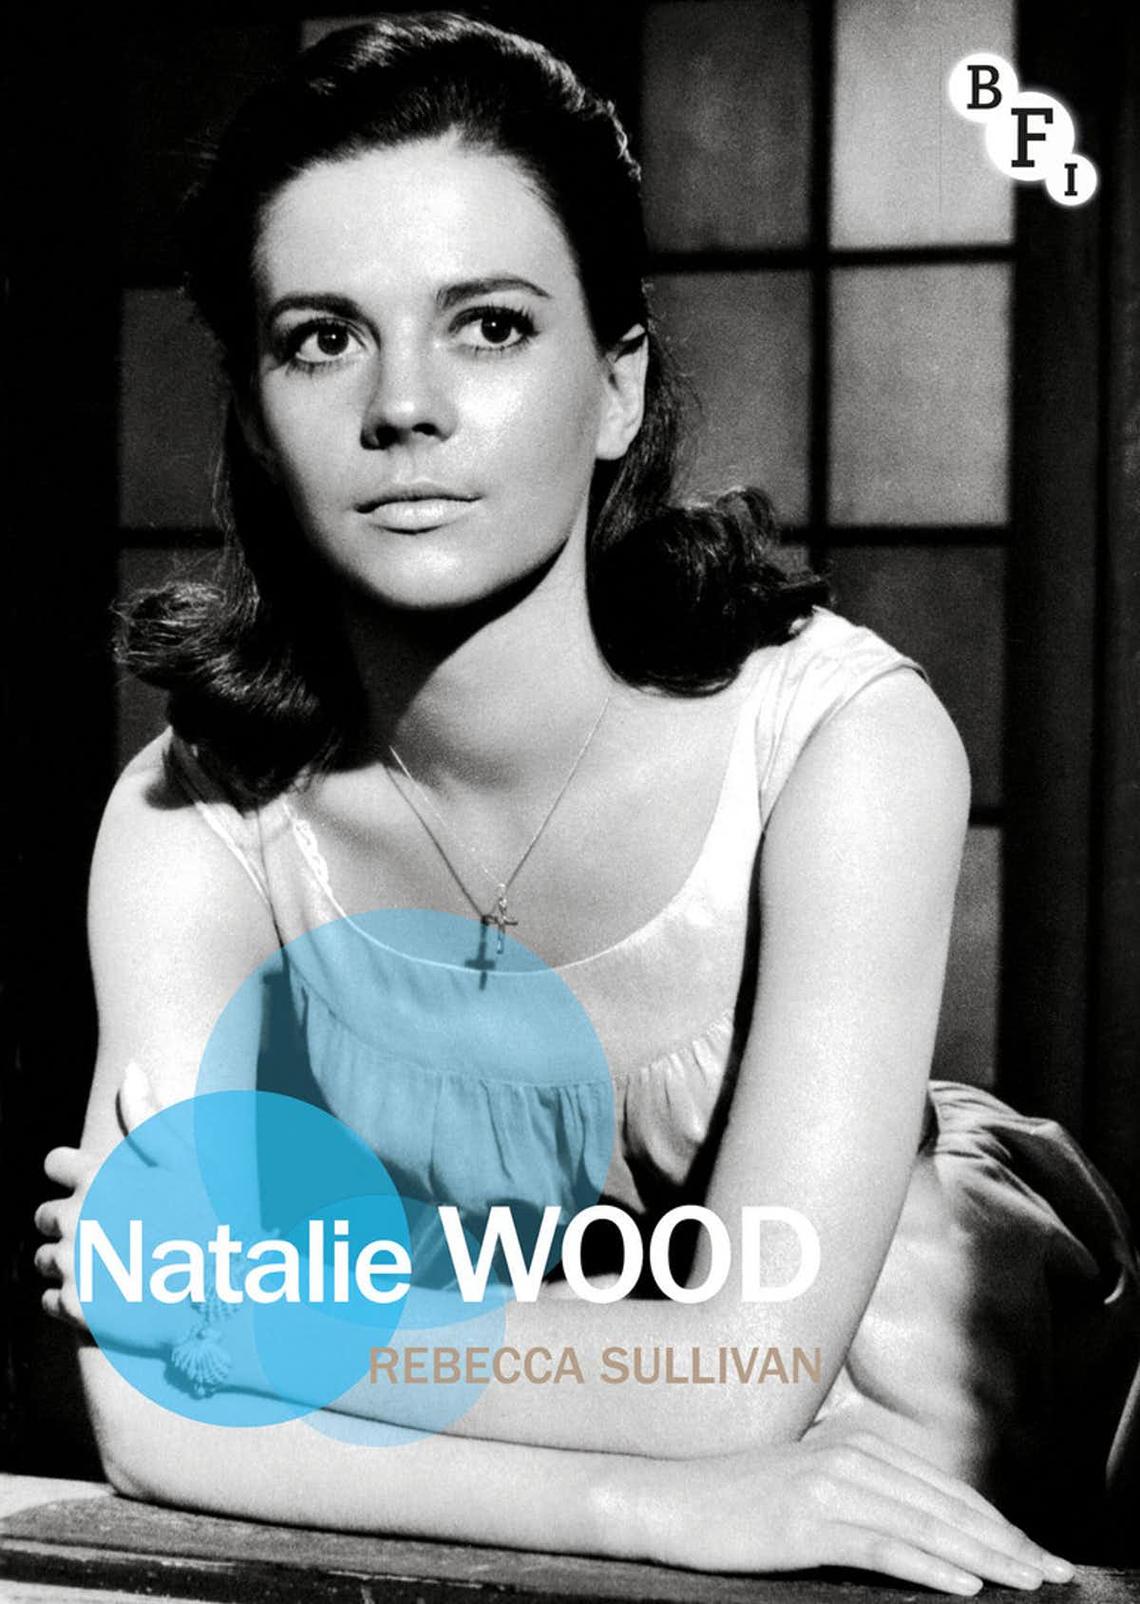 Natalie Wood by Rebecca Sullivan.